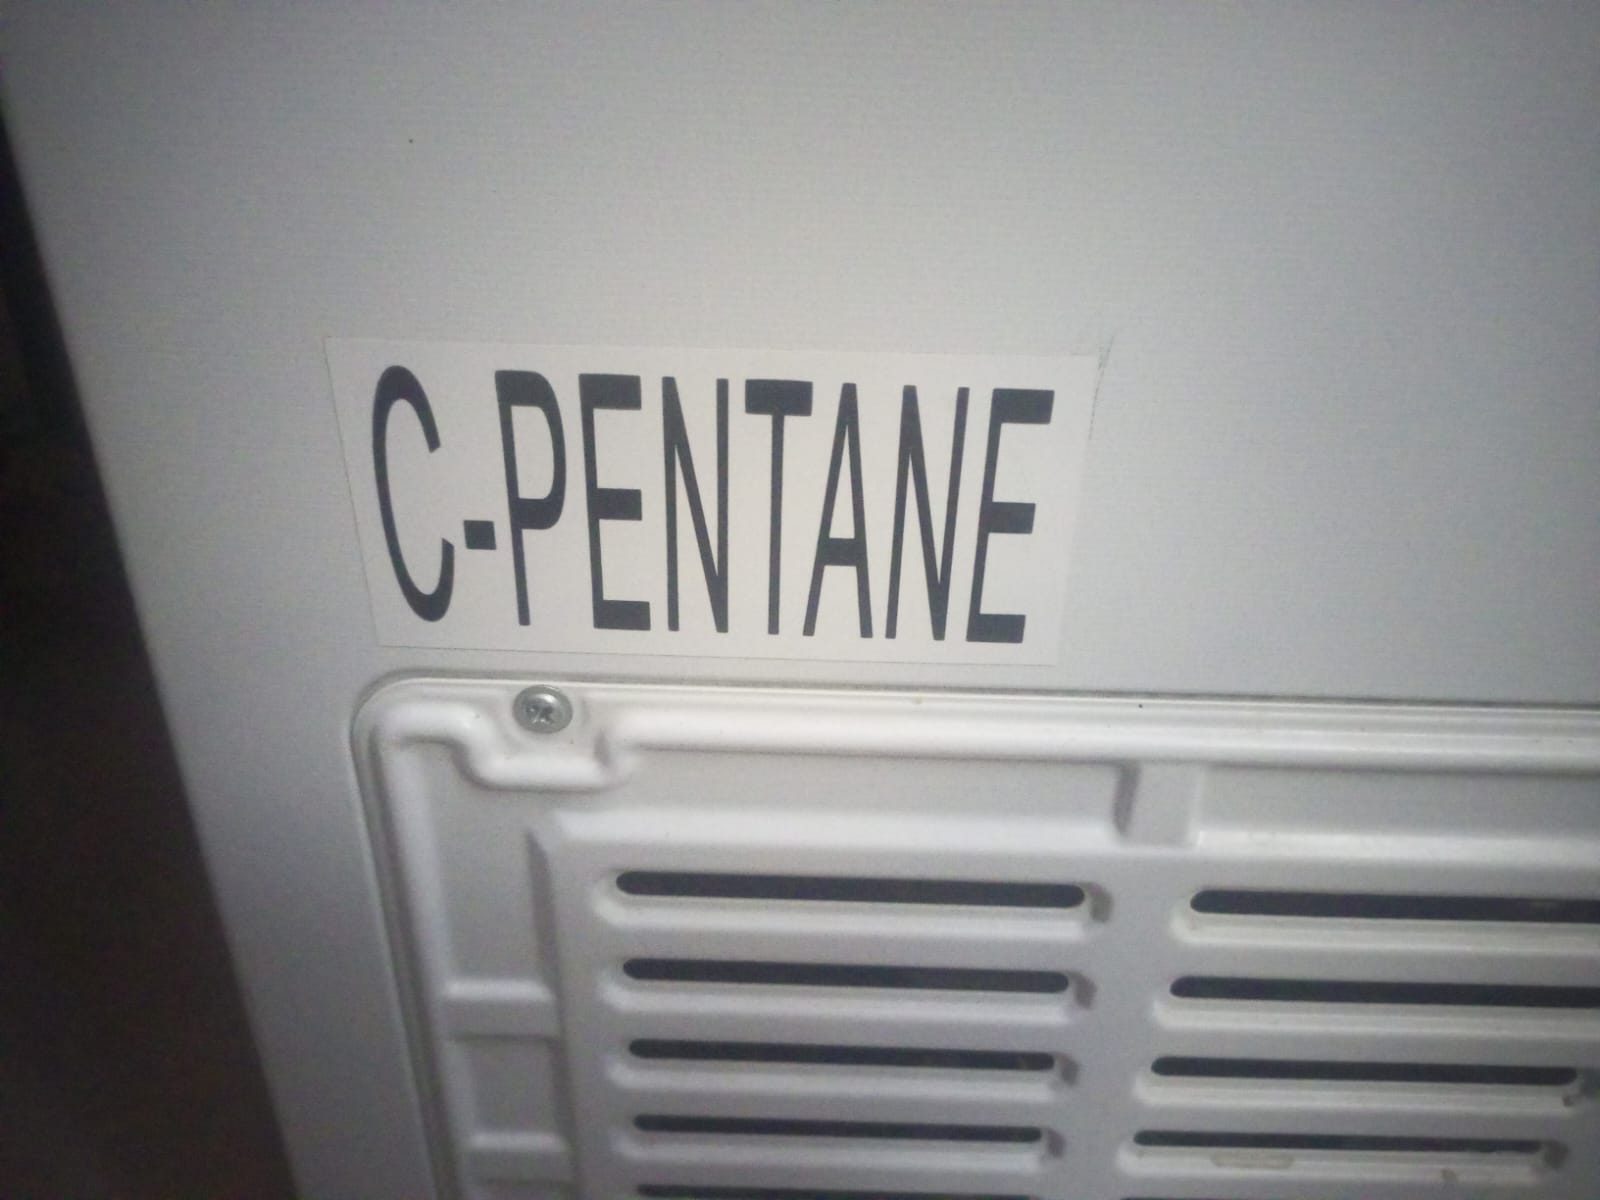 C-Pentane (Cyclopentane) in My Freezer